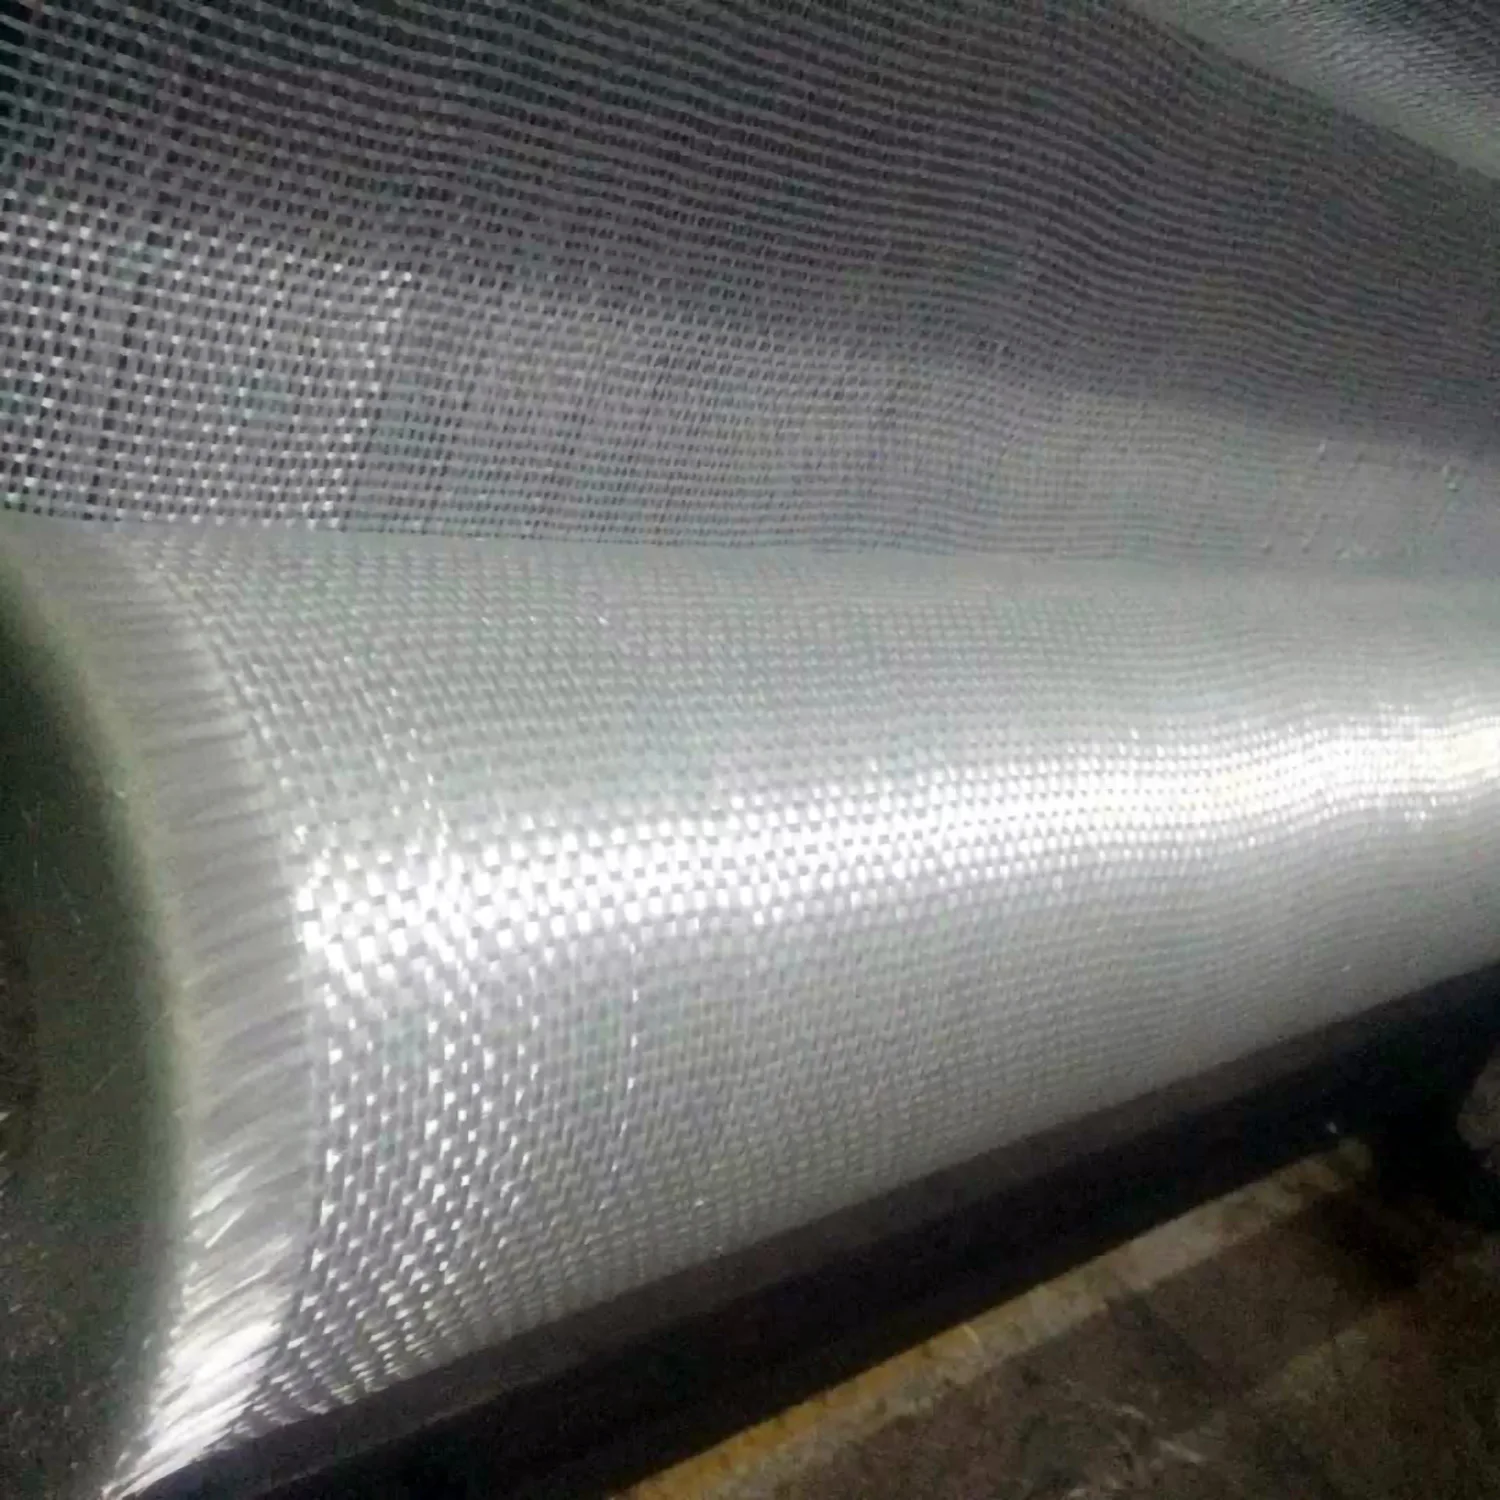 Woven Roving fiberglass fabric